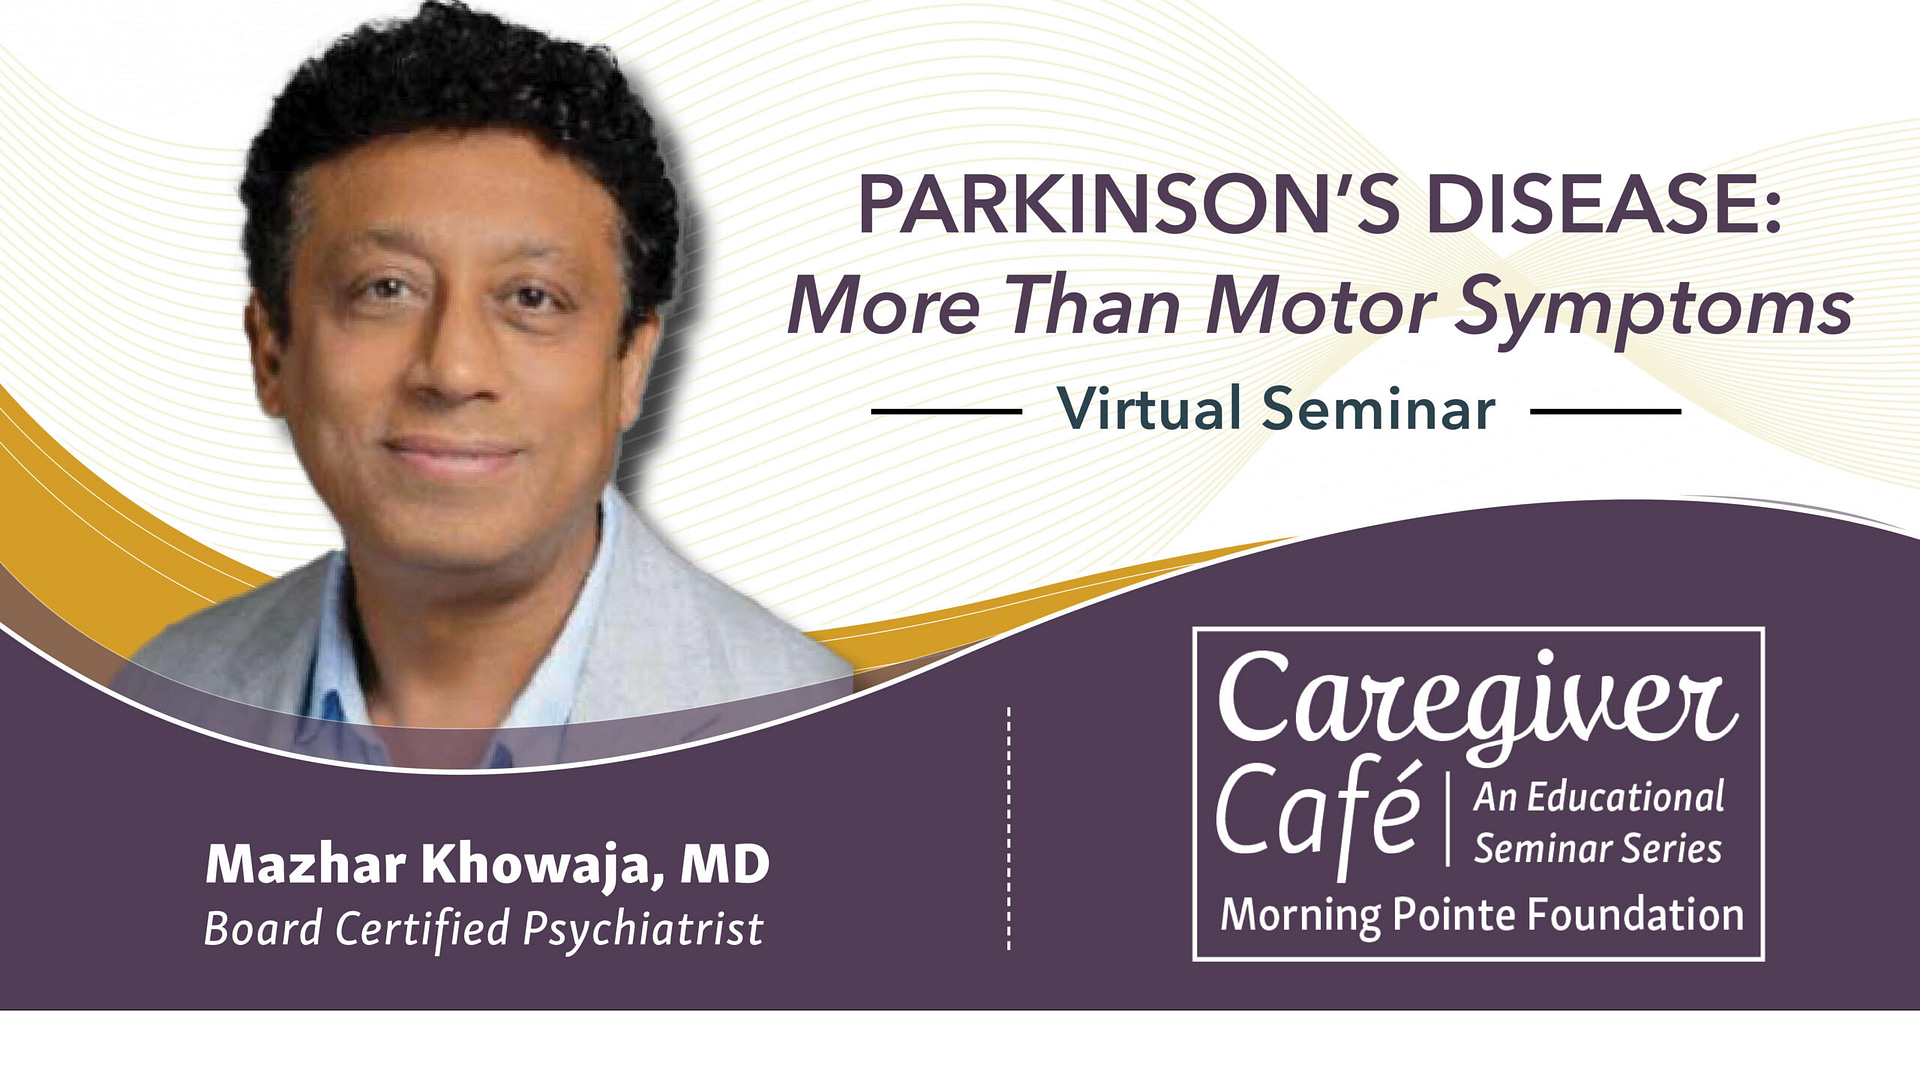 Parkinson's Disease: More Than Motor Symptoms Morning Pointe Caregiver Café